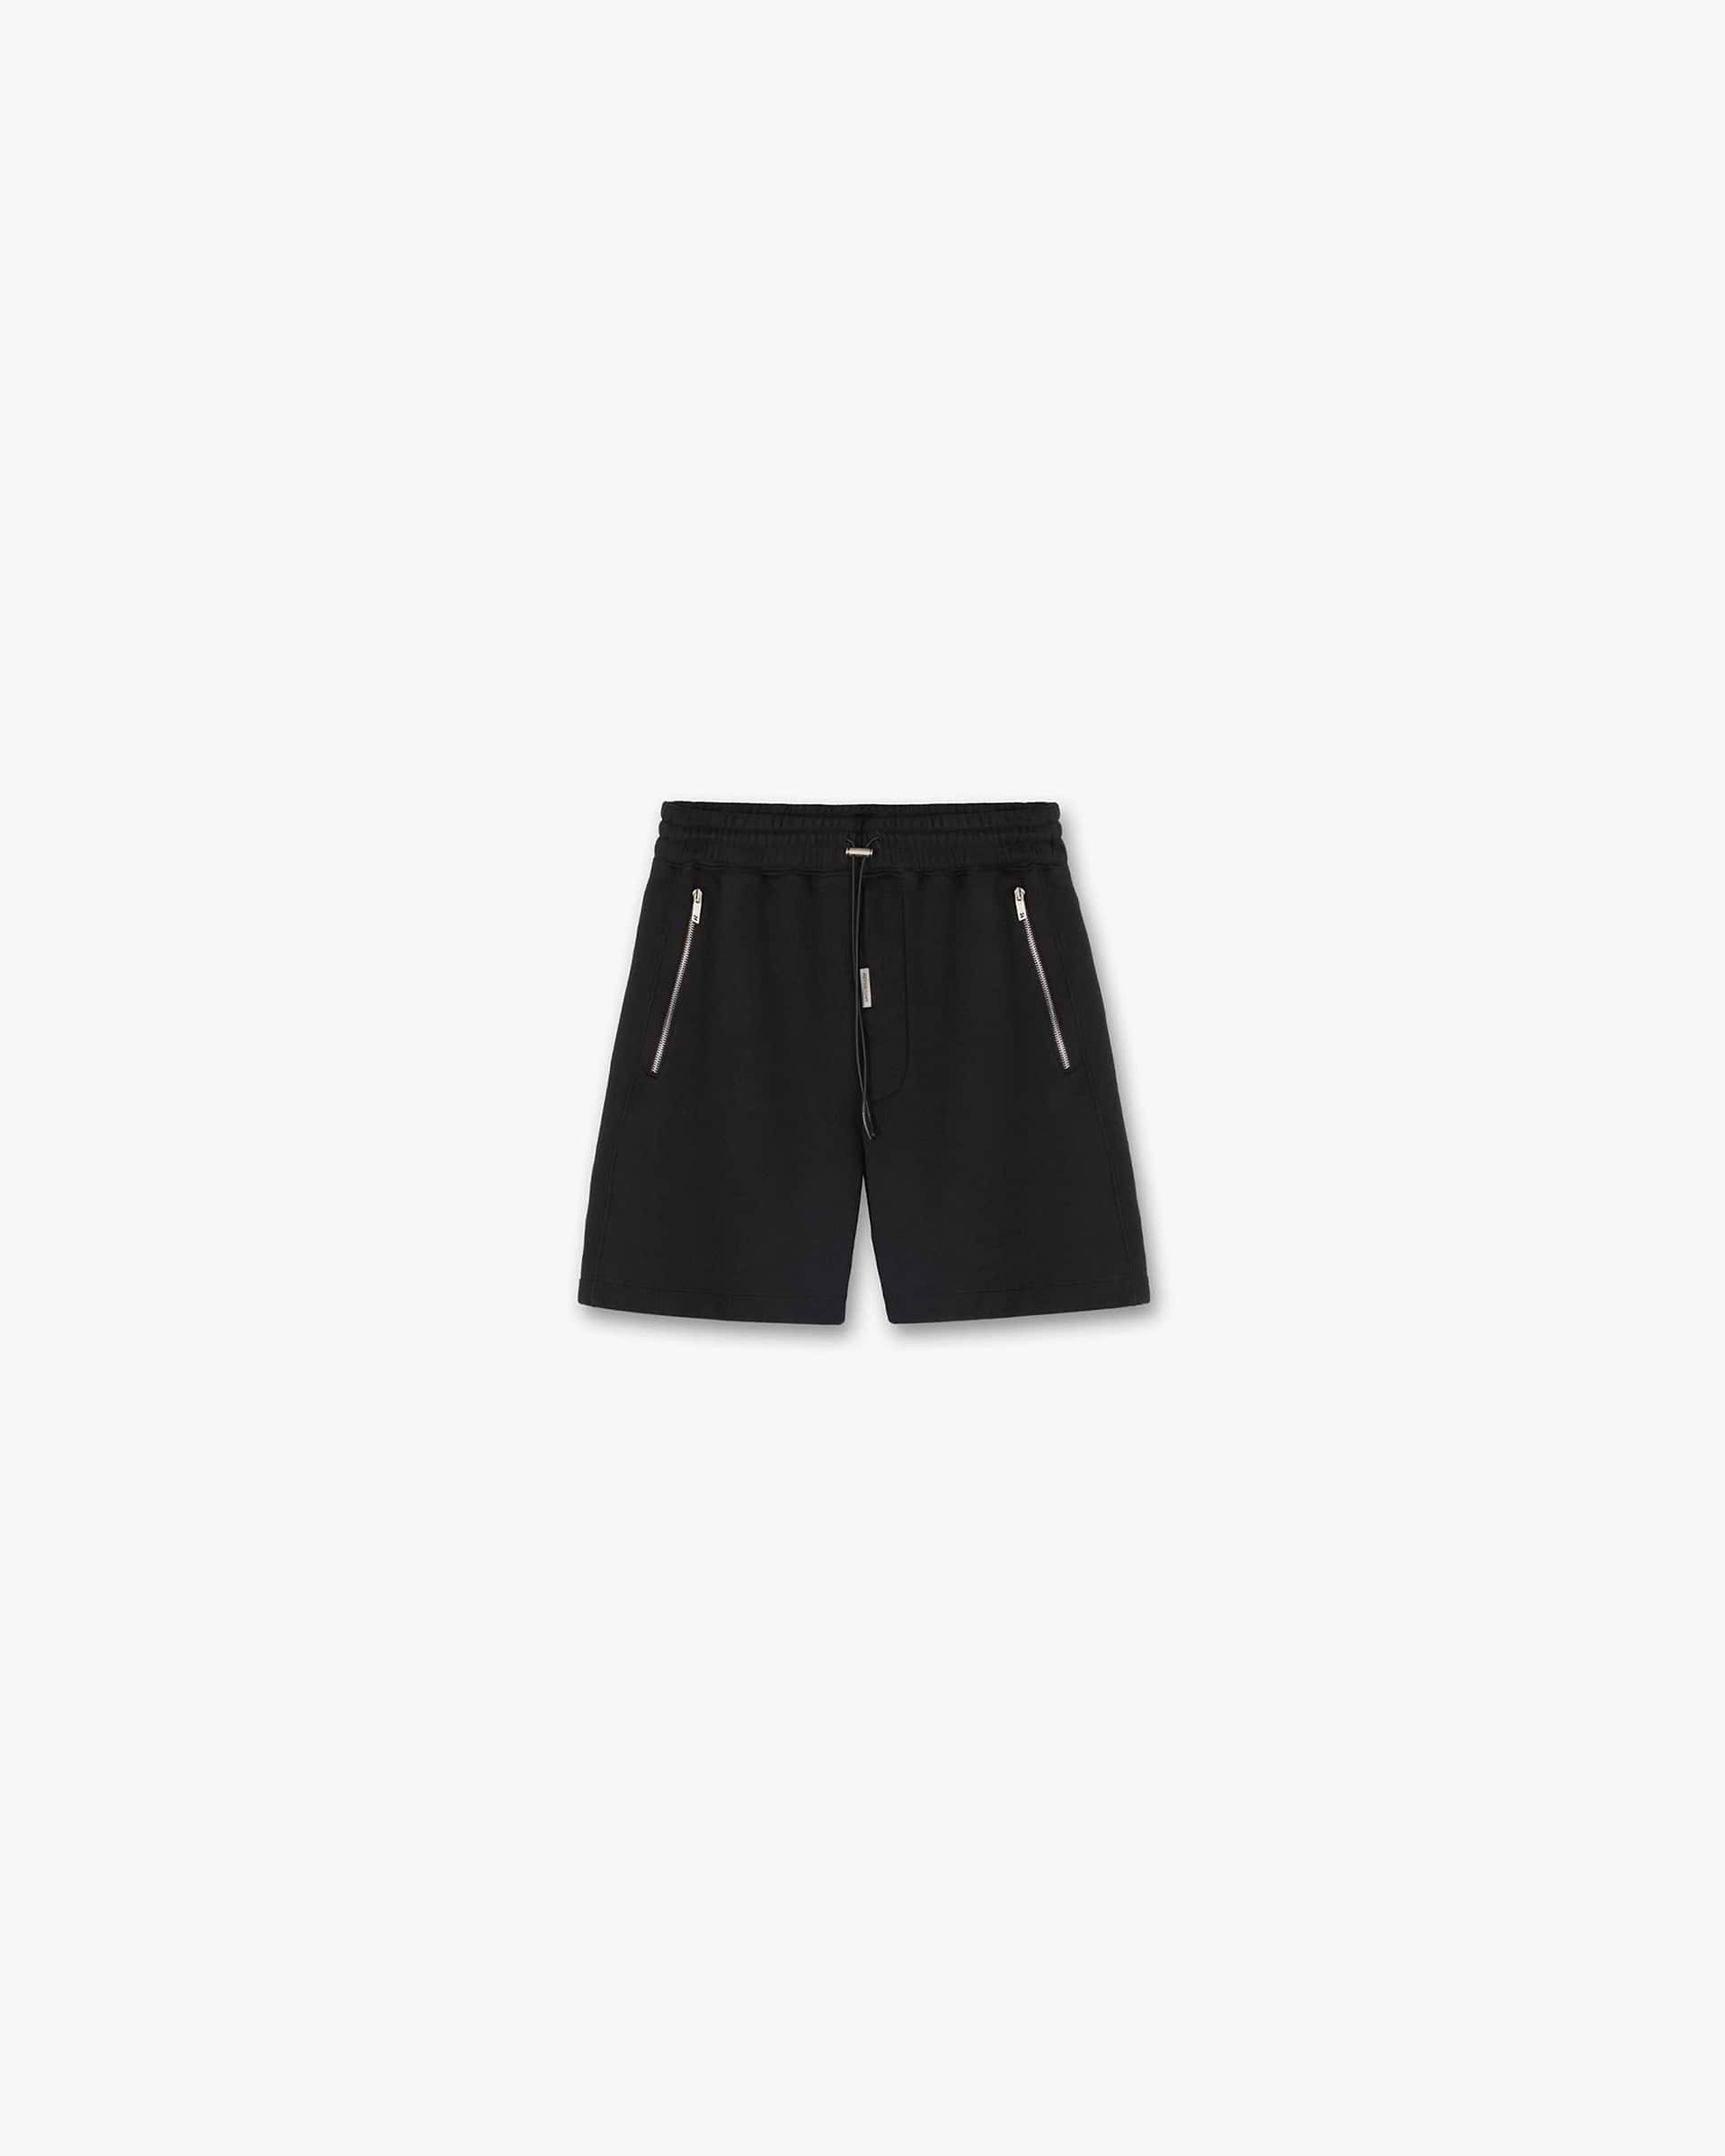 Blank Shorts | Jet Black v1 Shorts BLANKS | Represent Clo